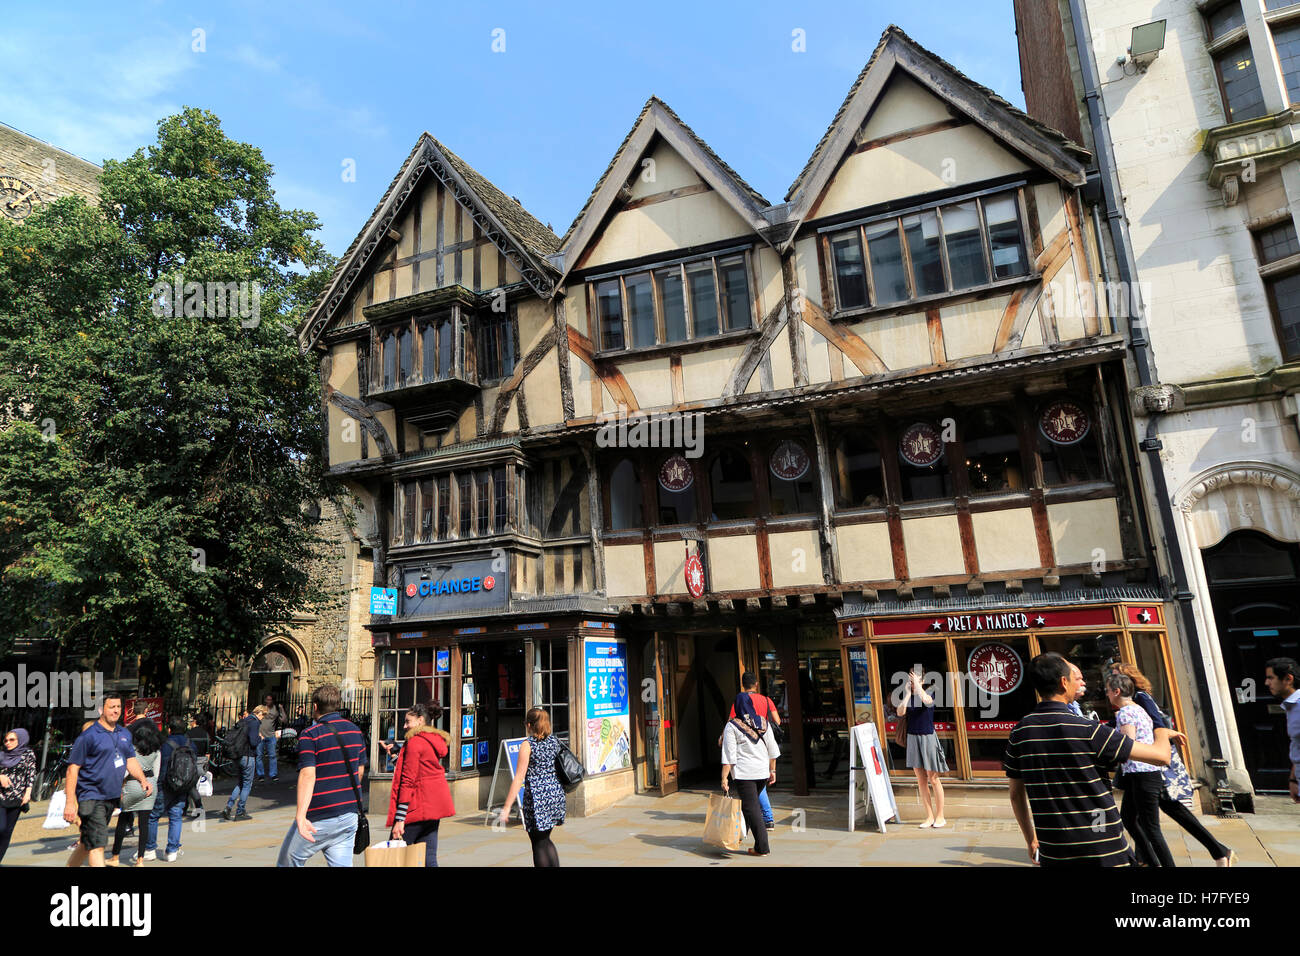 Historic half-timbered buildings on Cornmarket Street, city centre Oxford, England, UK Stock Photo